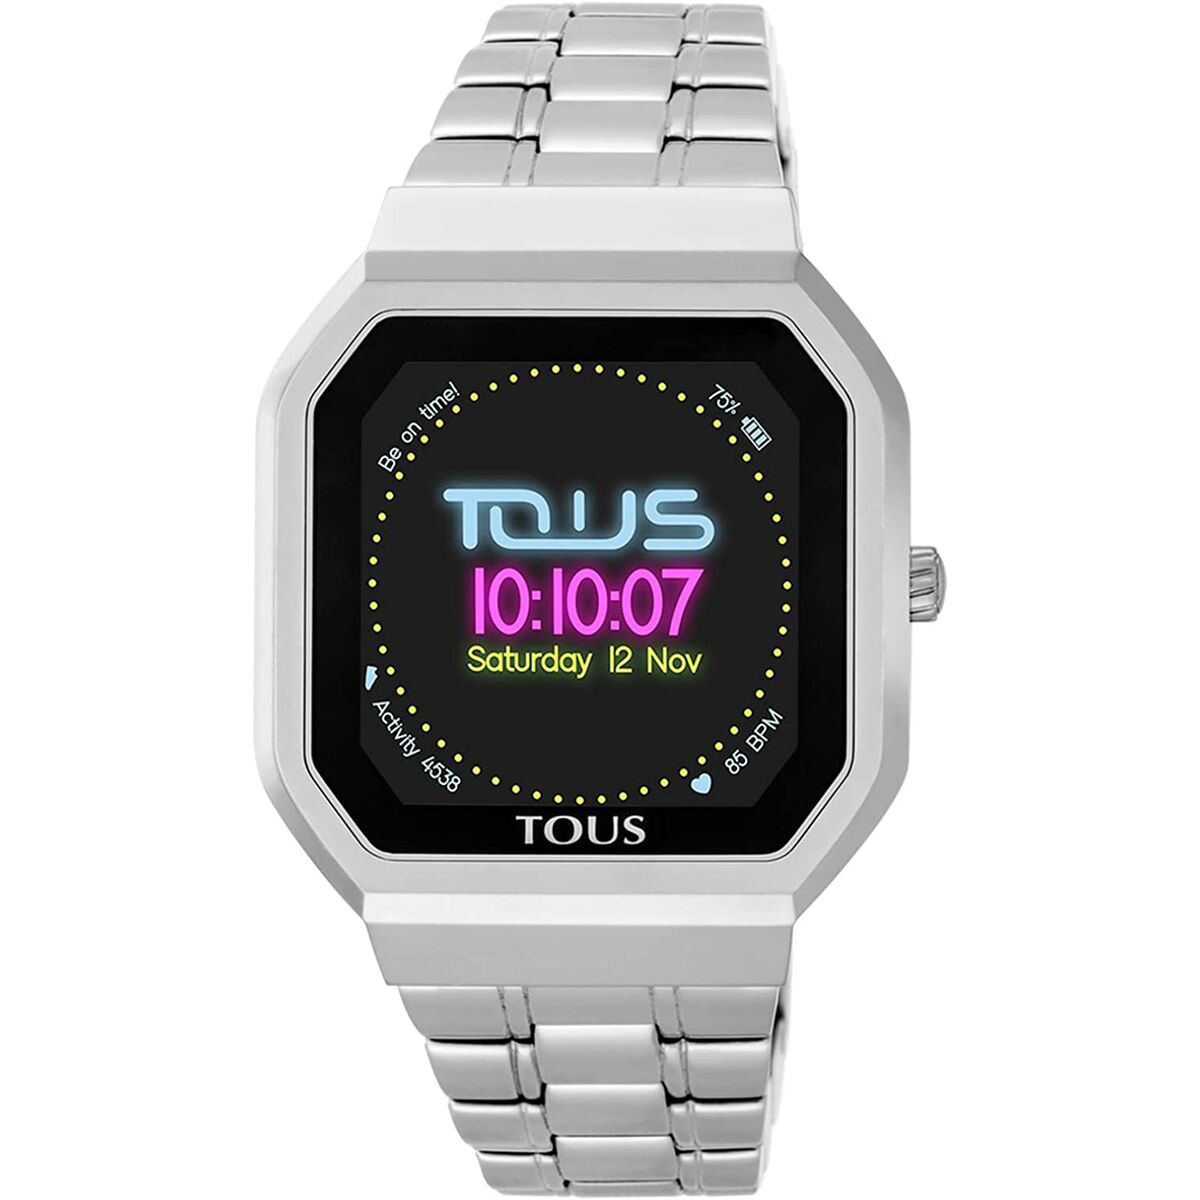 Kaufe Smartwatch Tous 100350695 bei AWK Flagship um € 255.00